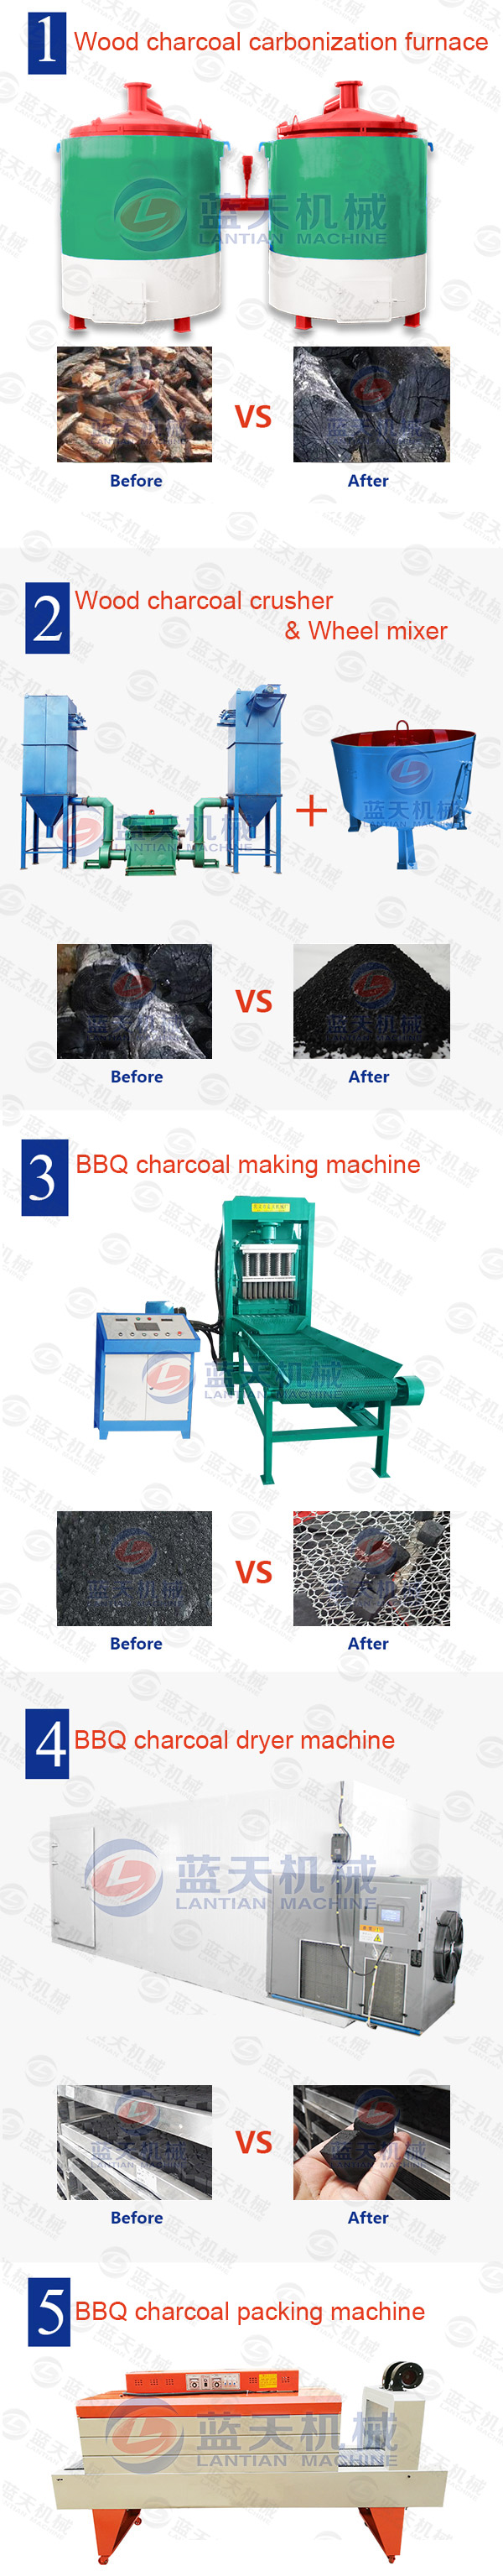 BBQ charcoal press equipment